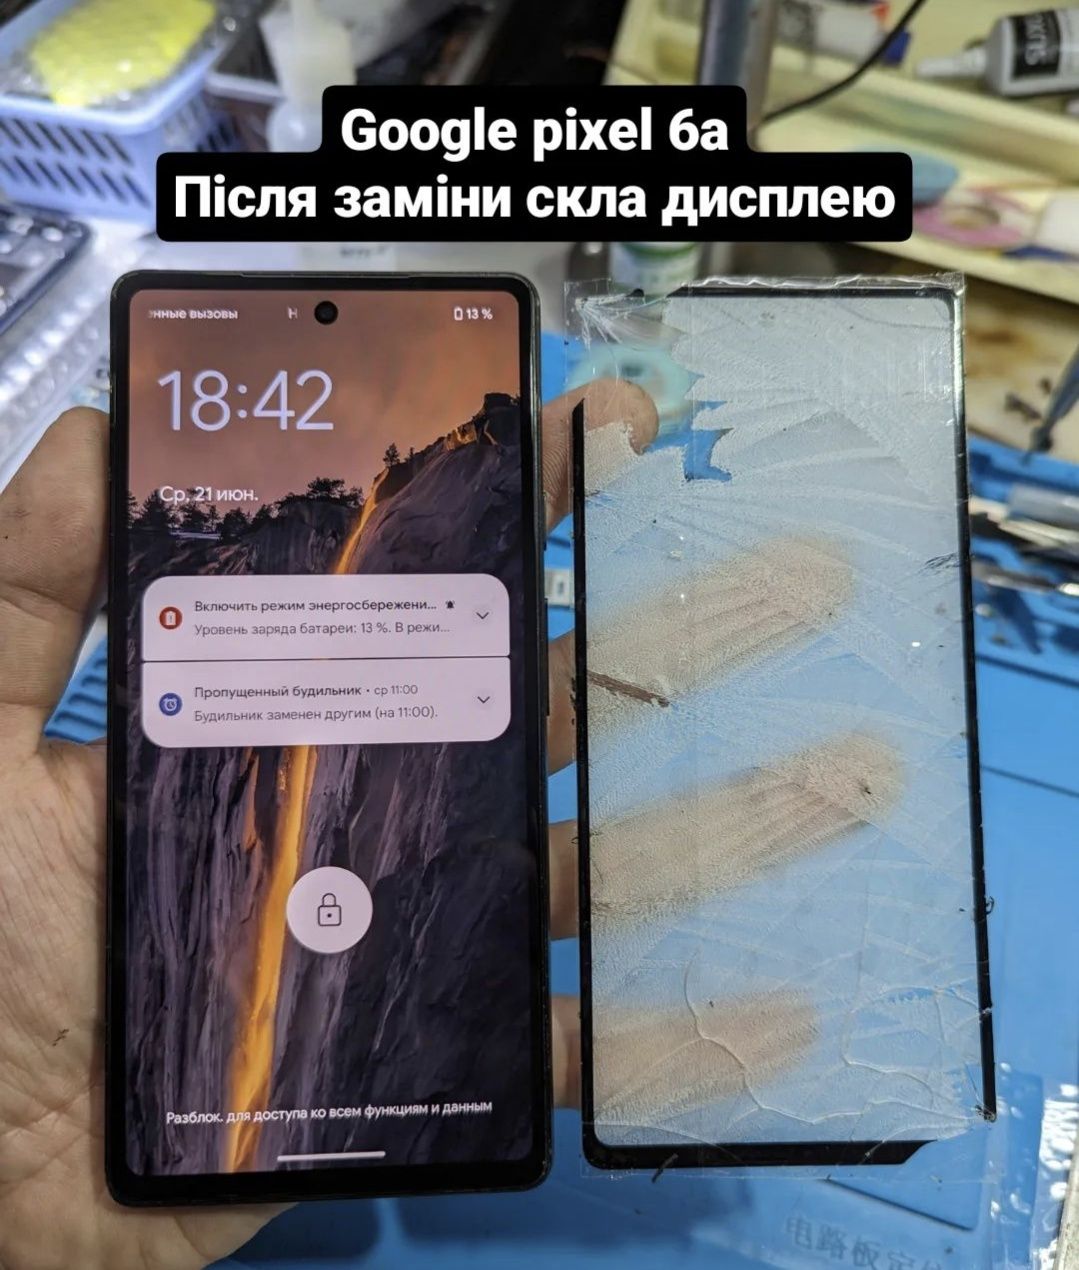 Google pixel ремонт дисплея замена стекла